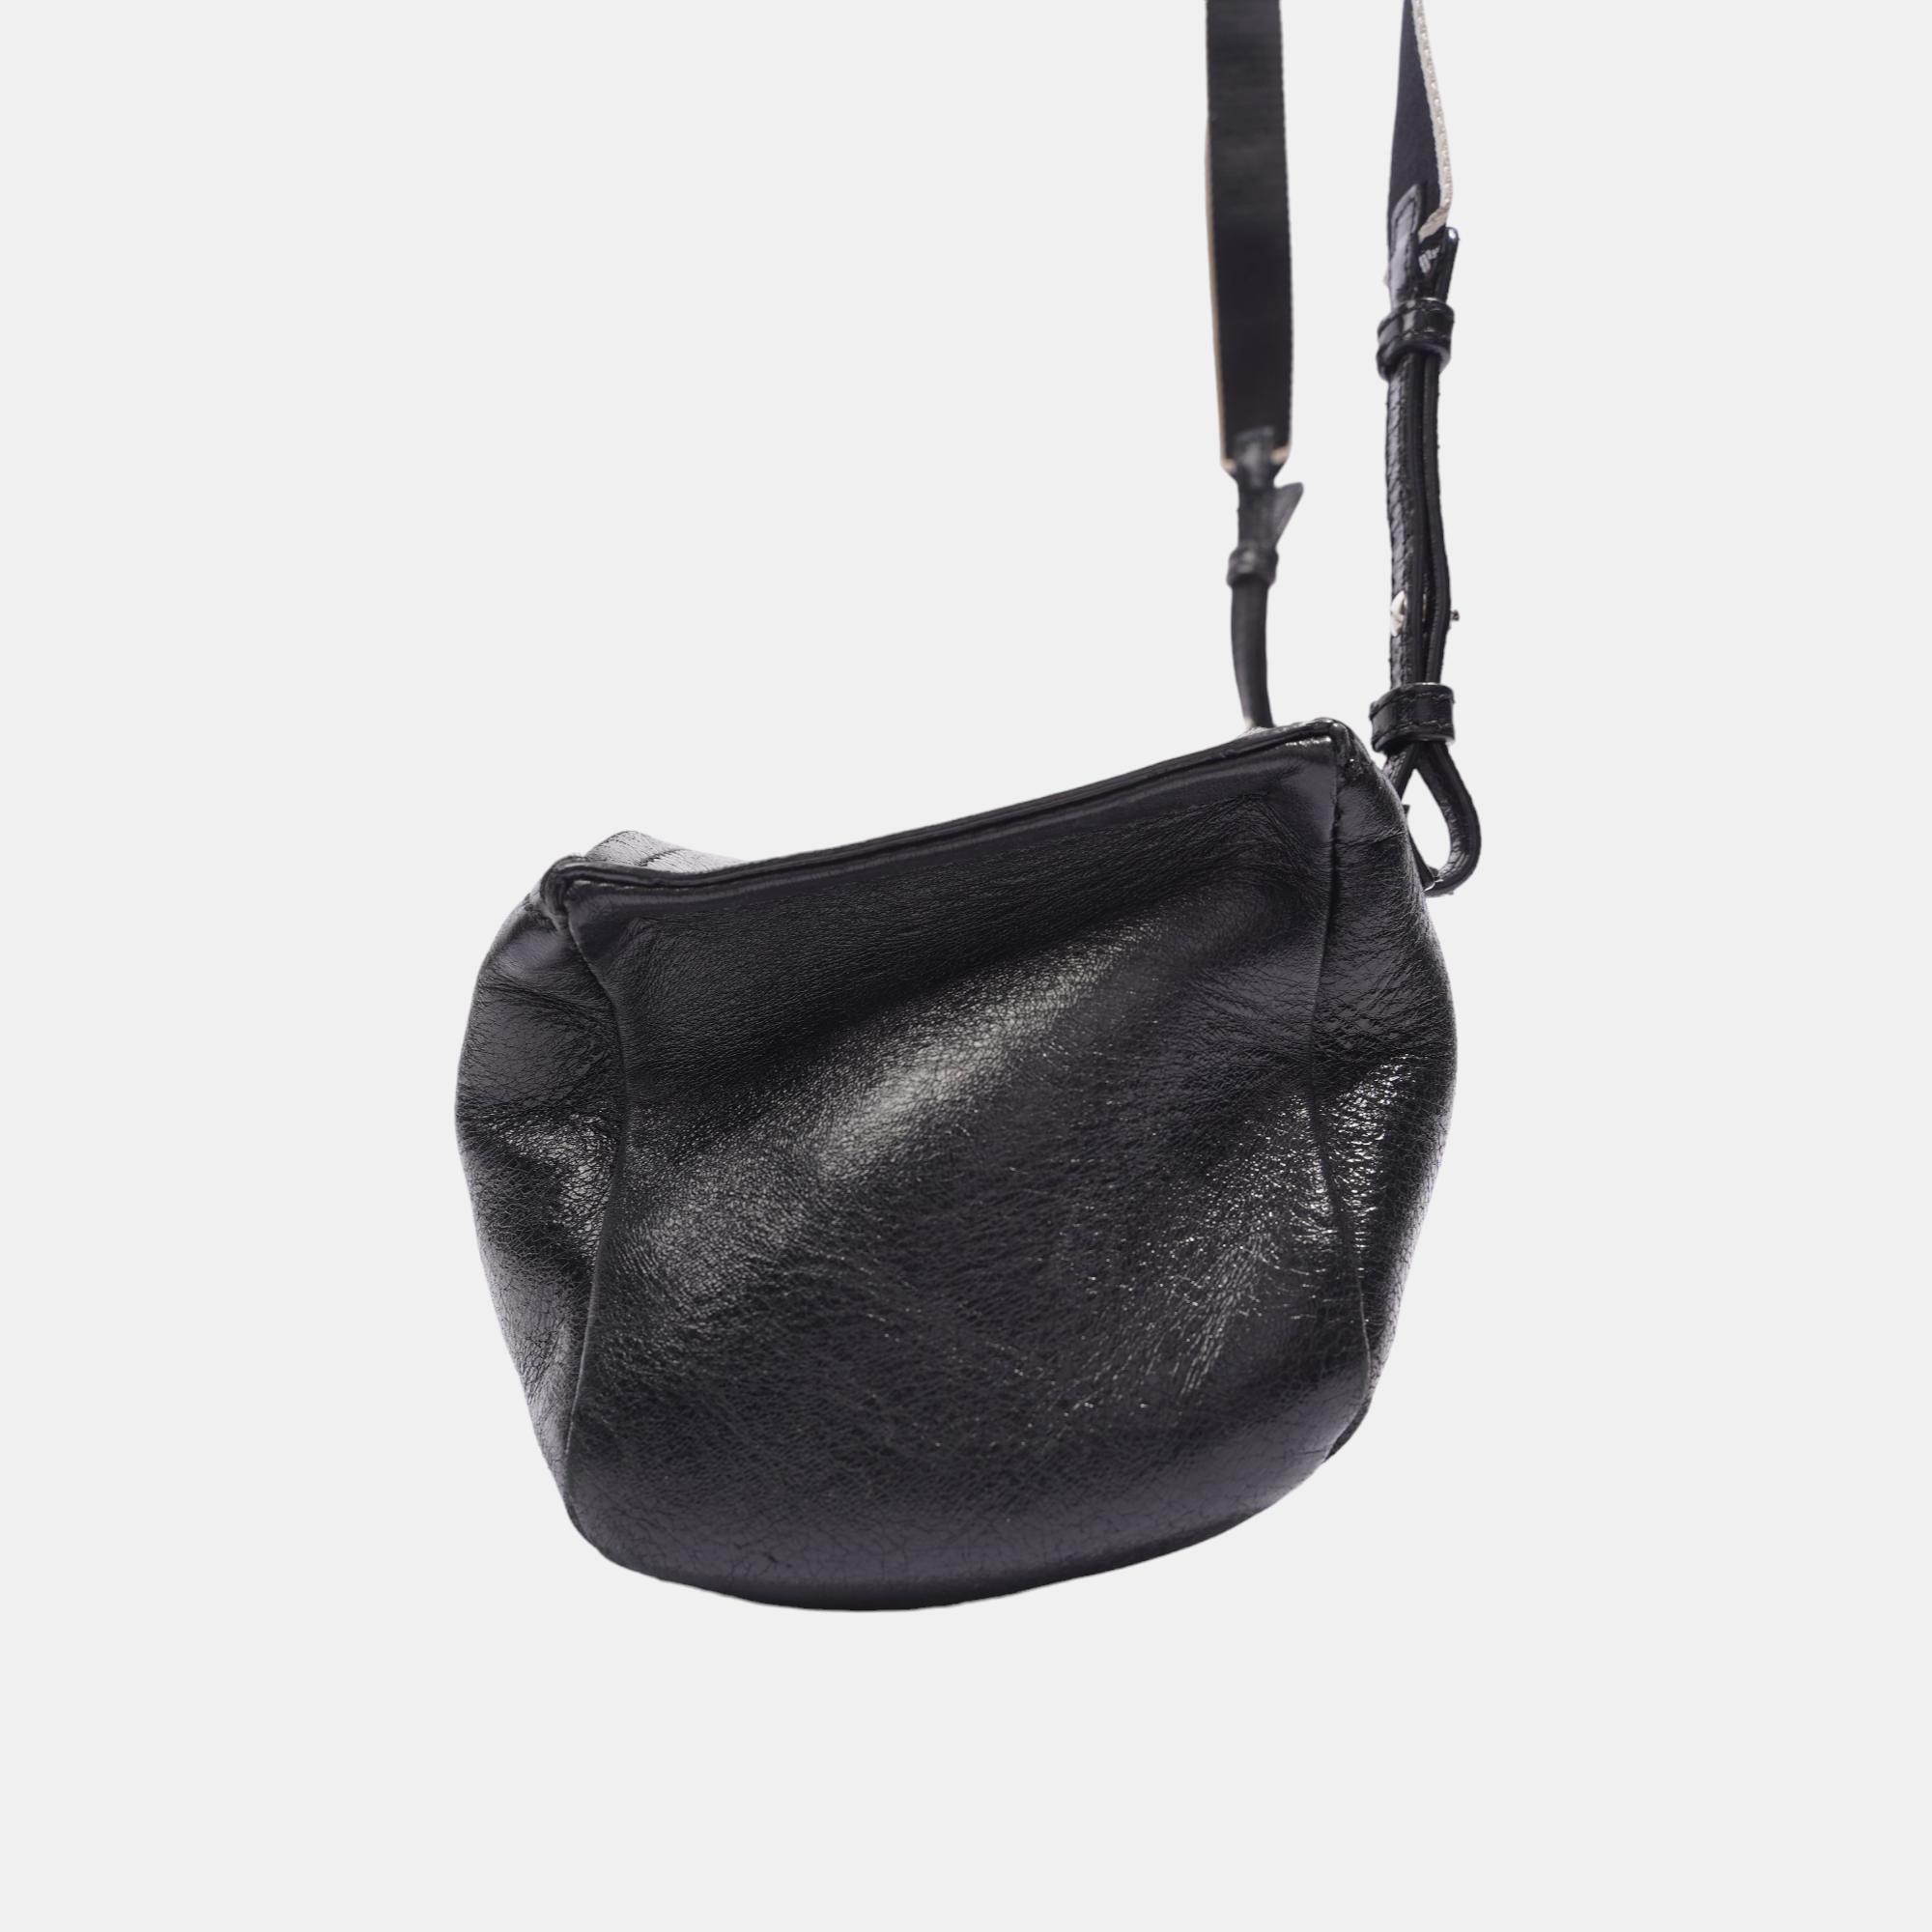 Givenchy Pandora Bag Black Leather Small